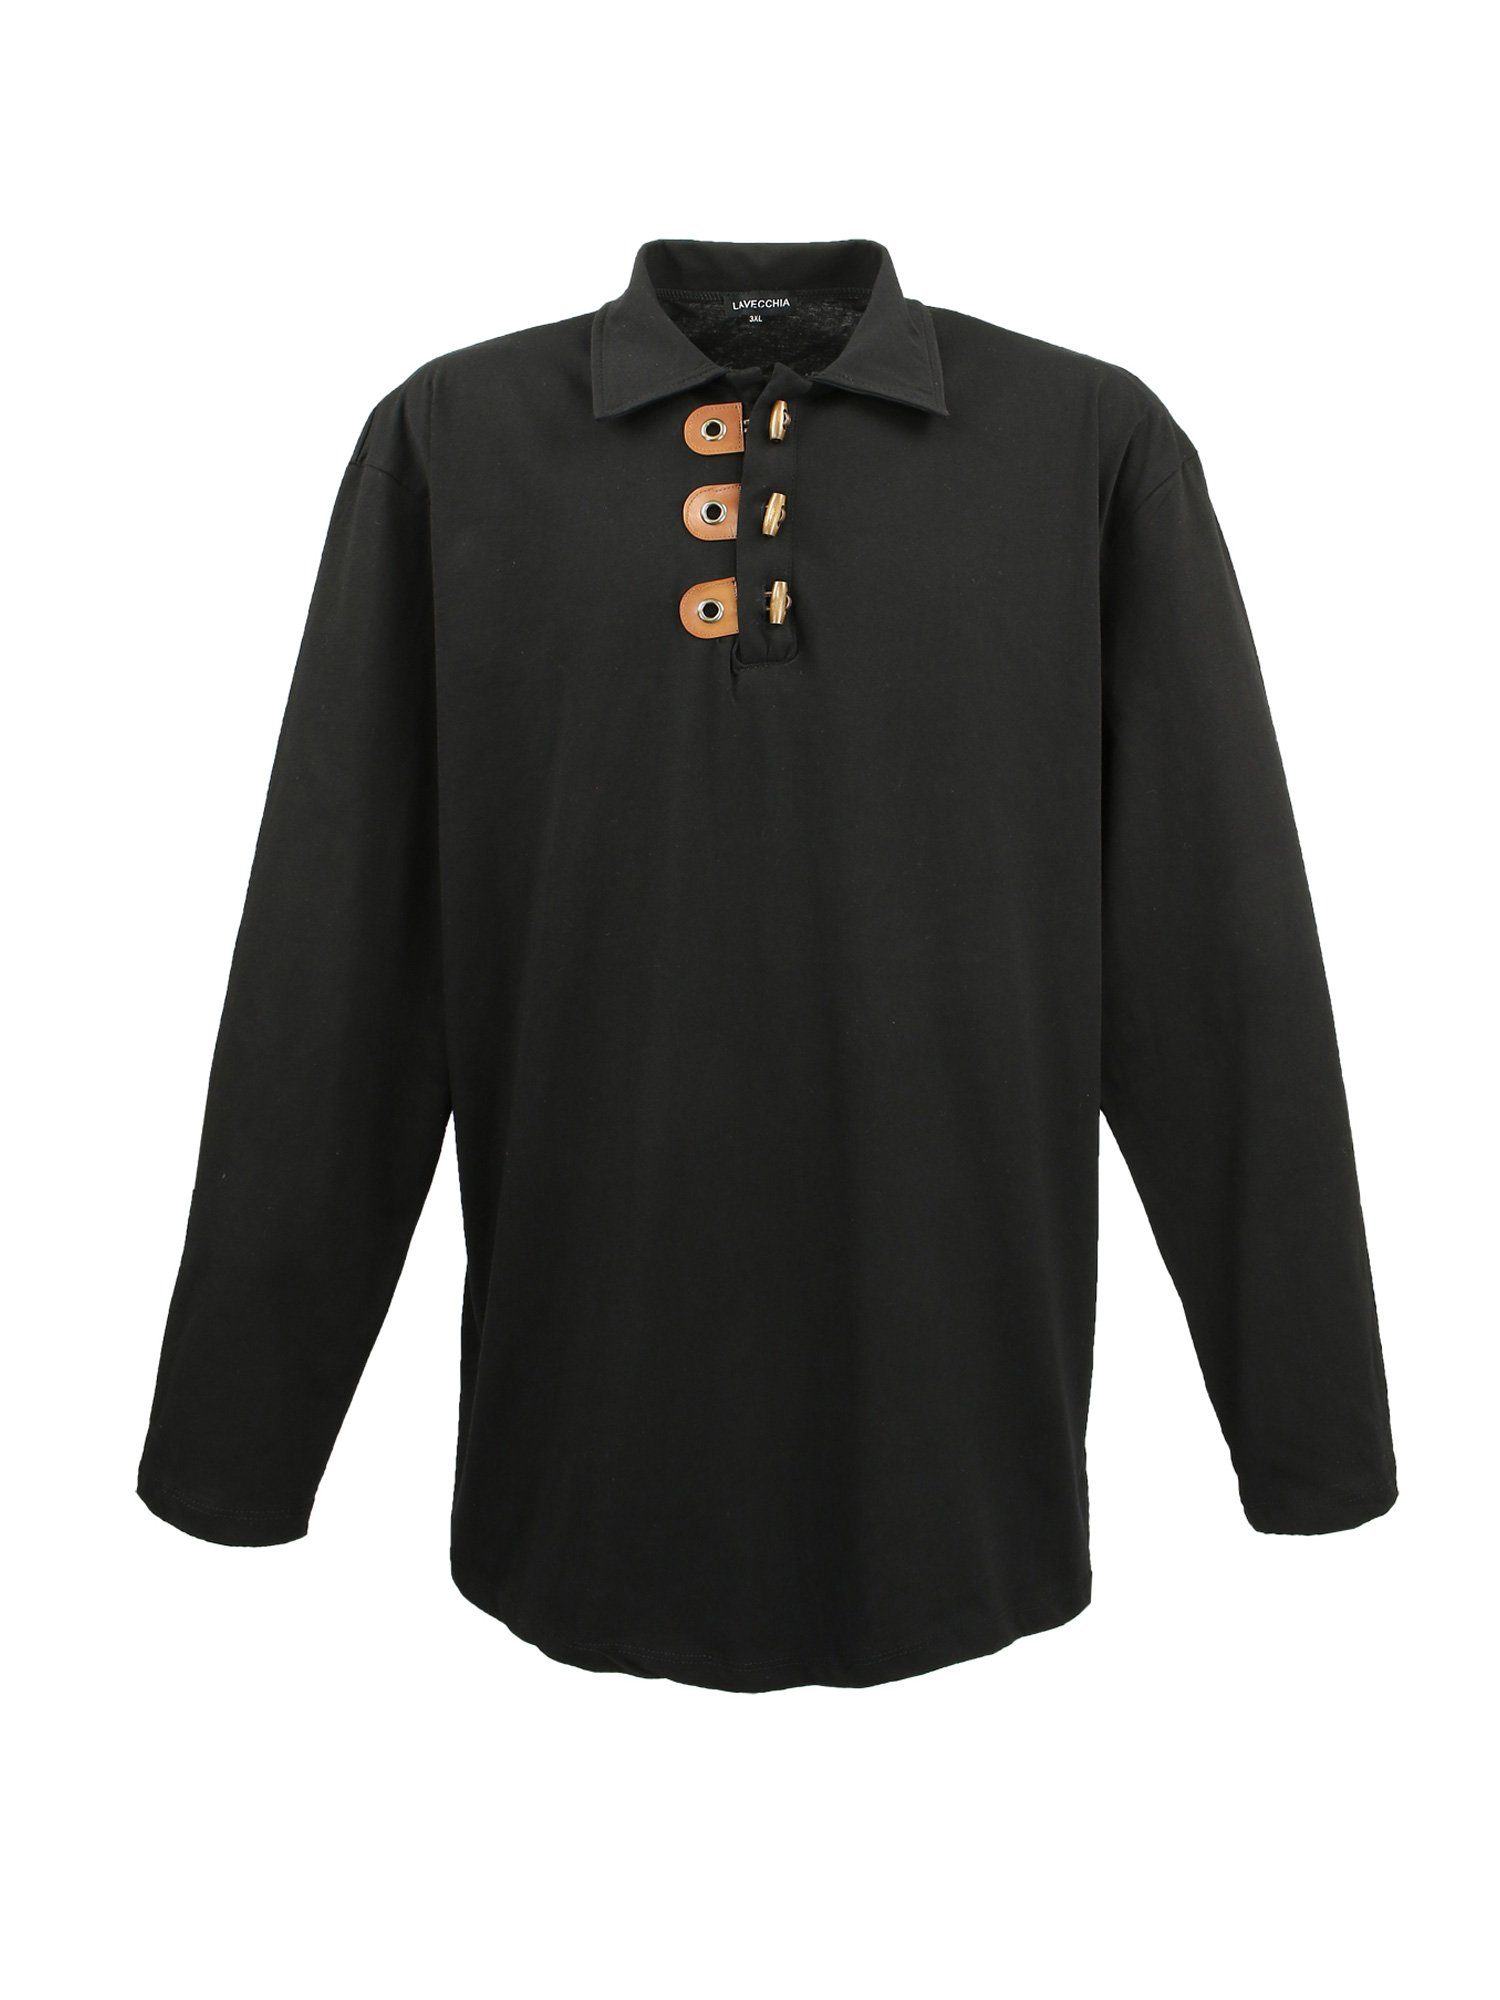 Lavecchia Langarm-Poloshirt Übergrößen Herren Shirt LV-604 Langarmshirt